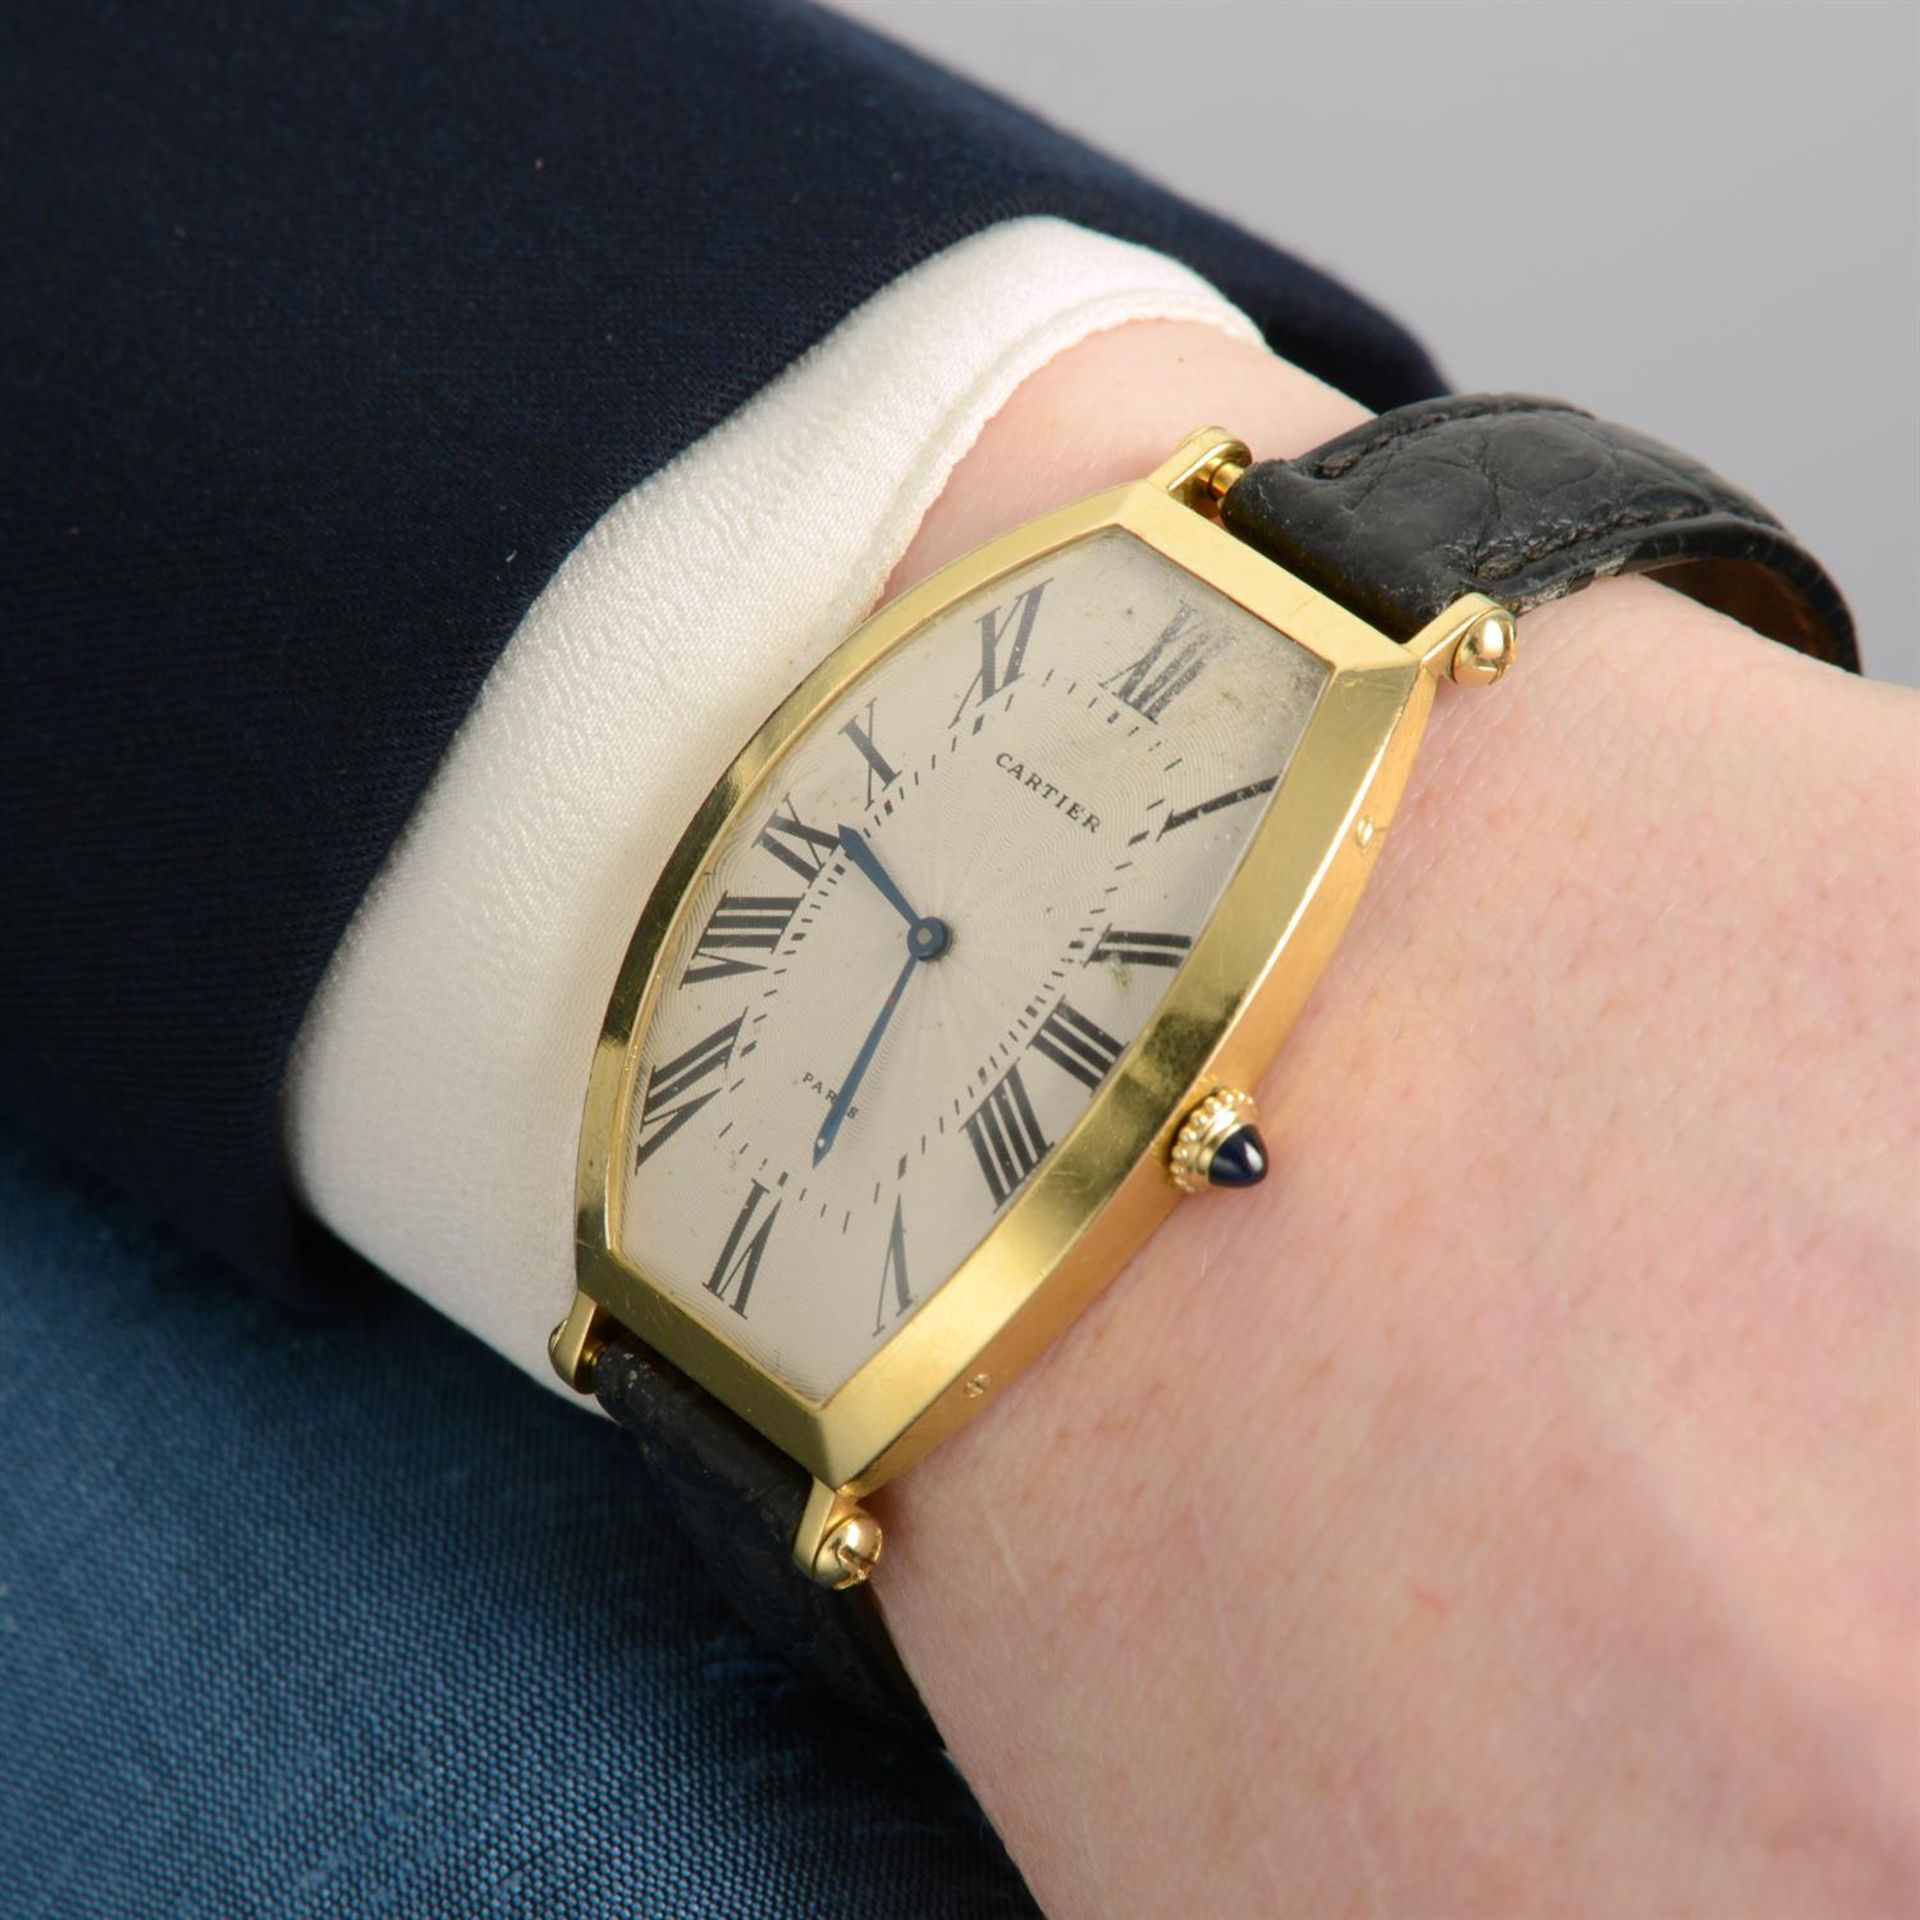 CARTIER - a yellow metal Tonneau wrist watch, 26x39mm. - Image 5 of 5